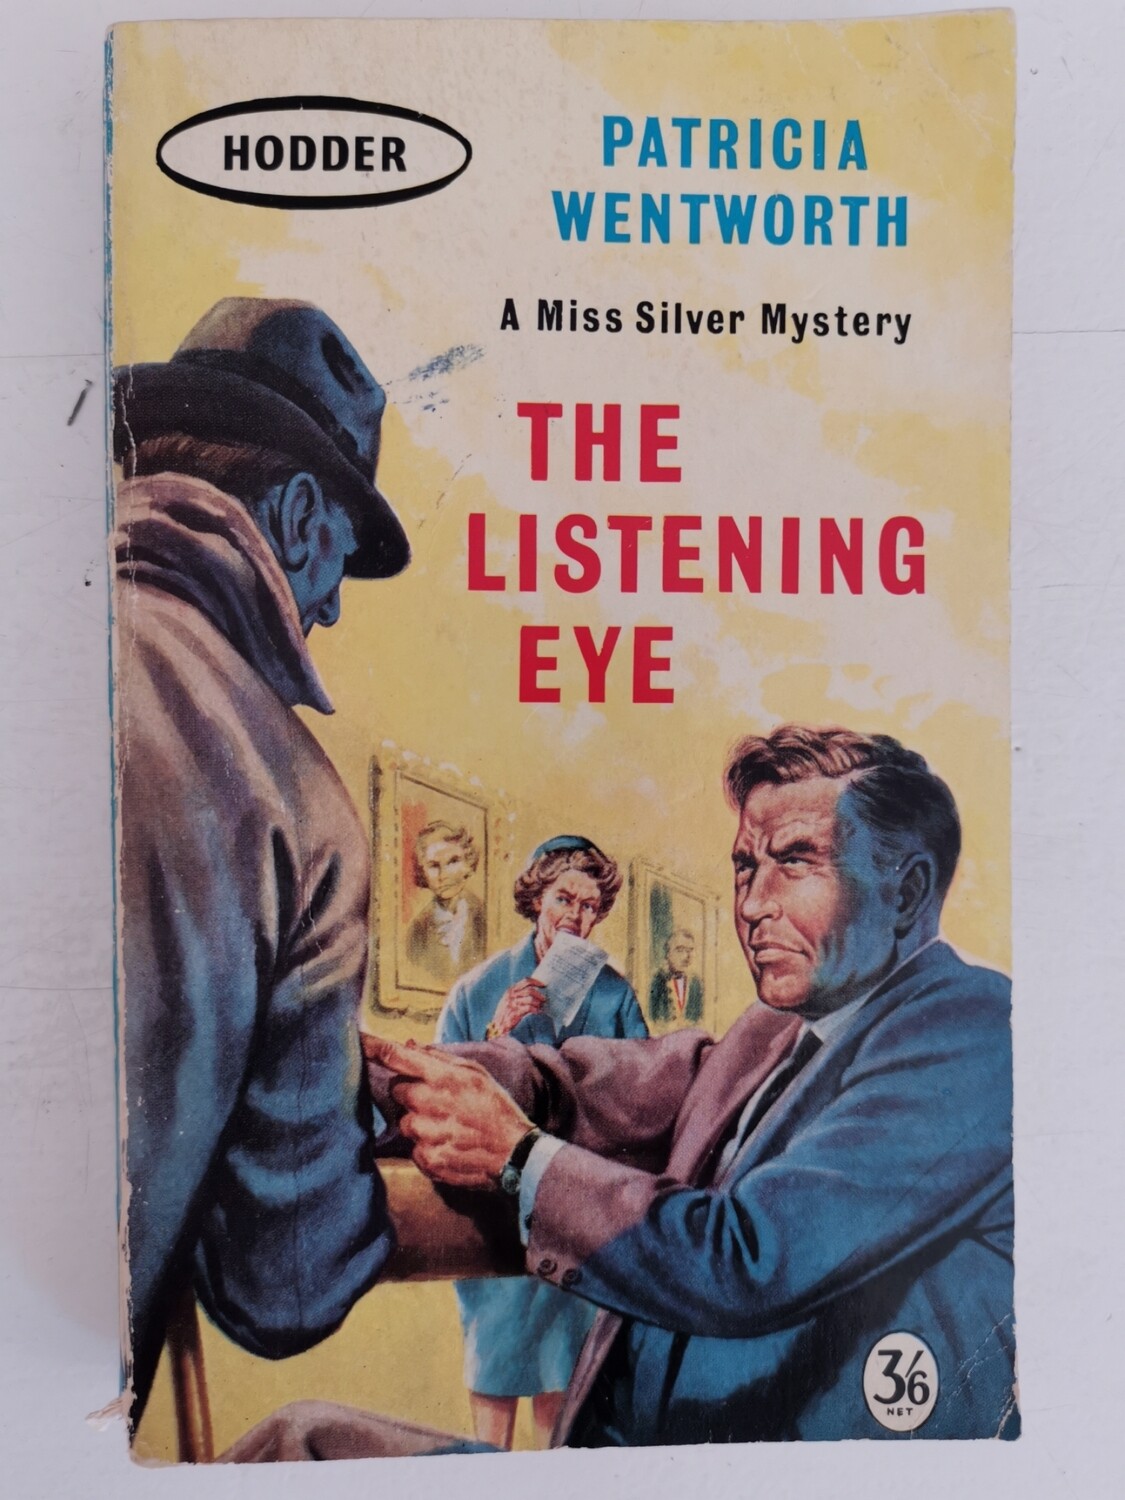 The listening eye, Patricia Wentworth